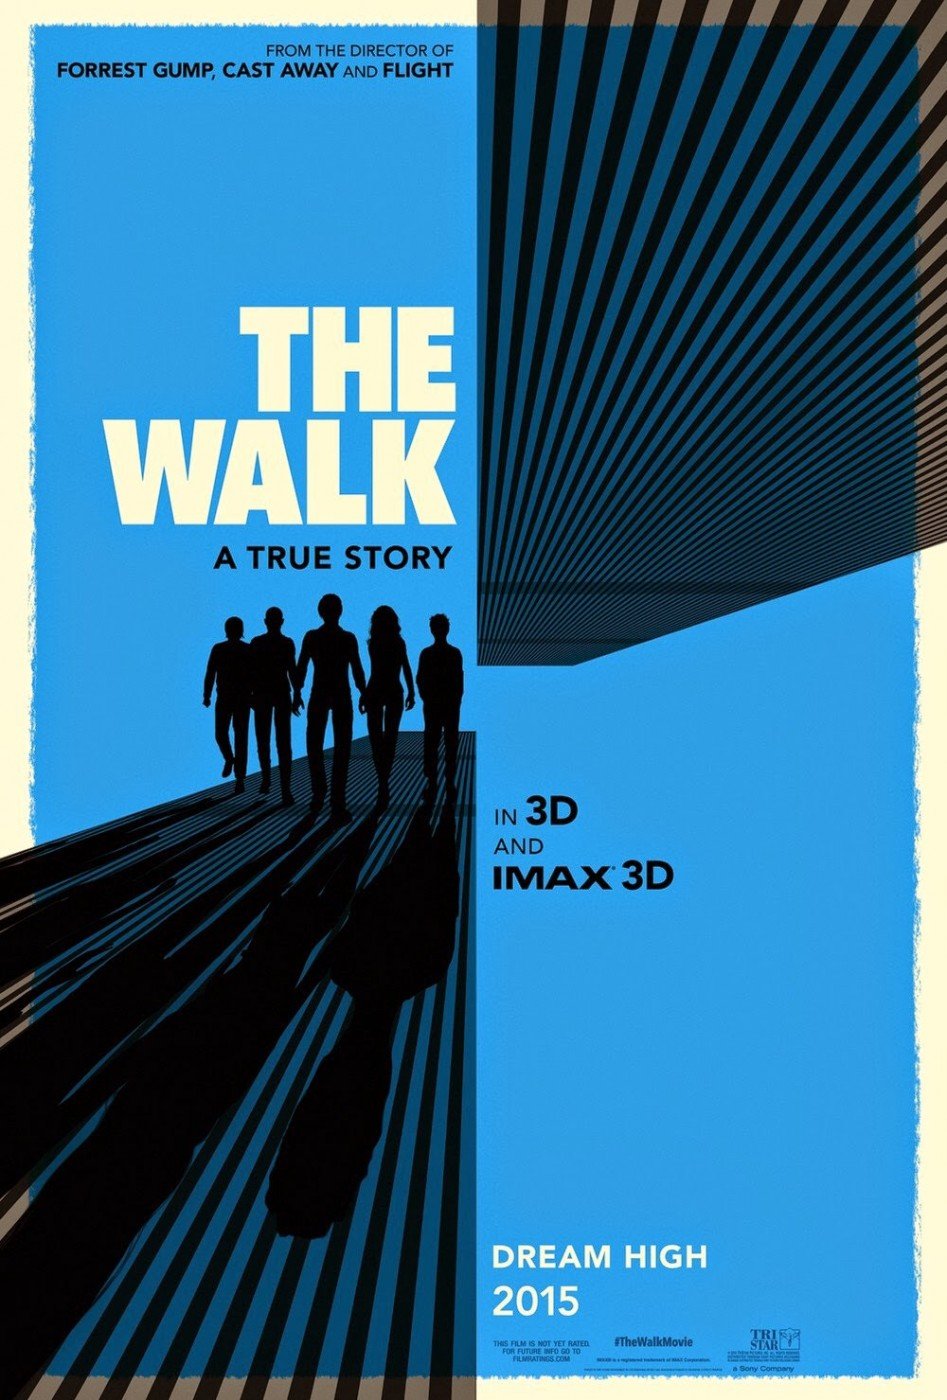 The Walk teaser trailer